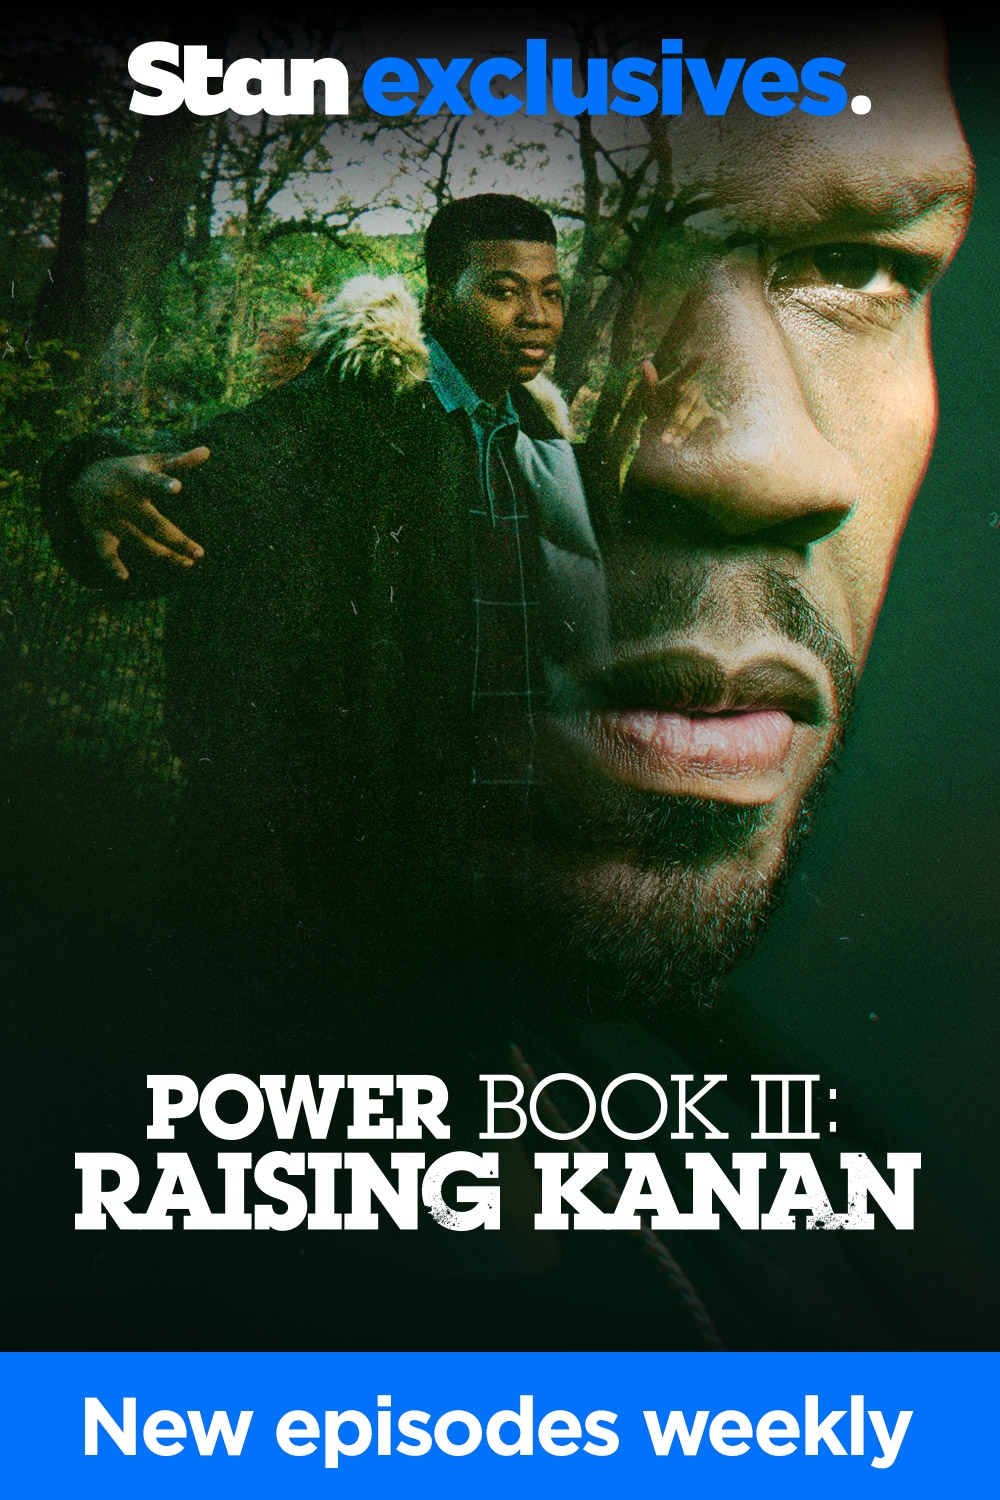 Watch Power Book III: Raising Kanan | Now Streaming | Stan. - Where To Watch Power Book Iii: Raising Kanan